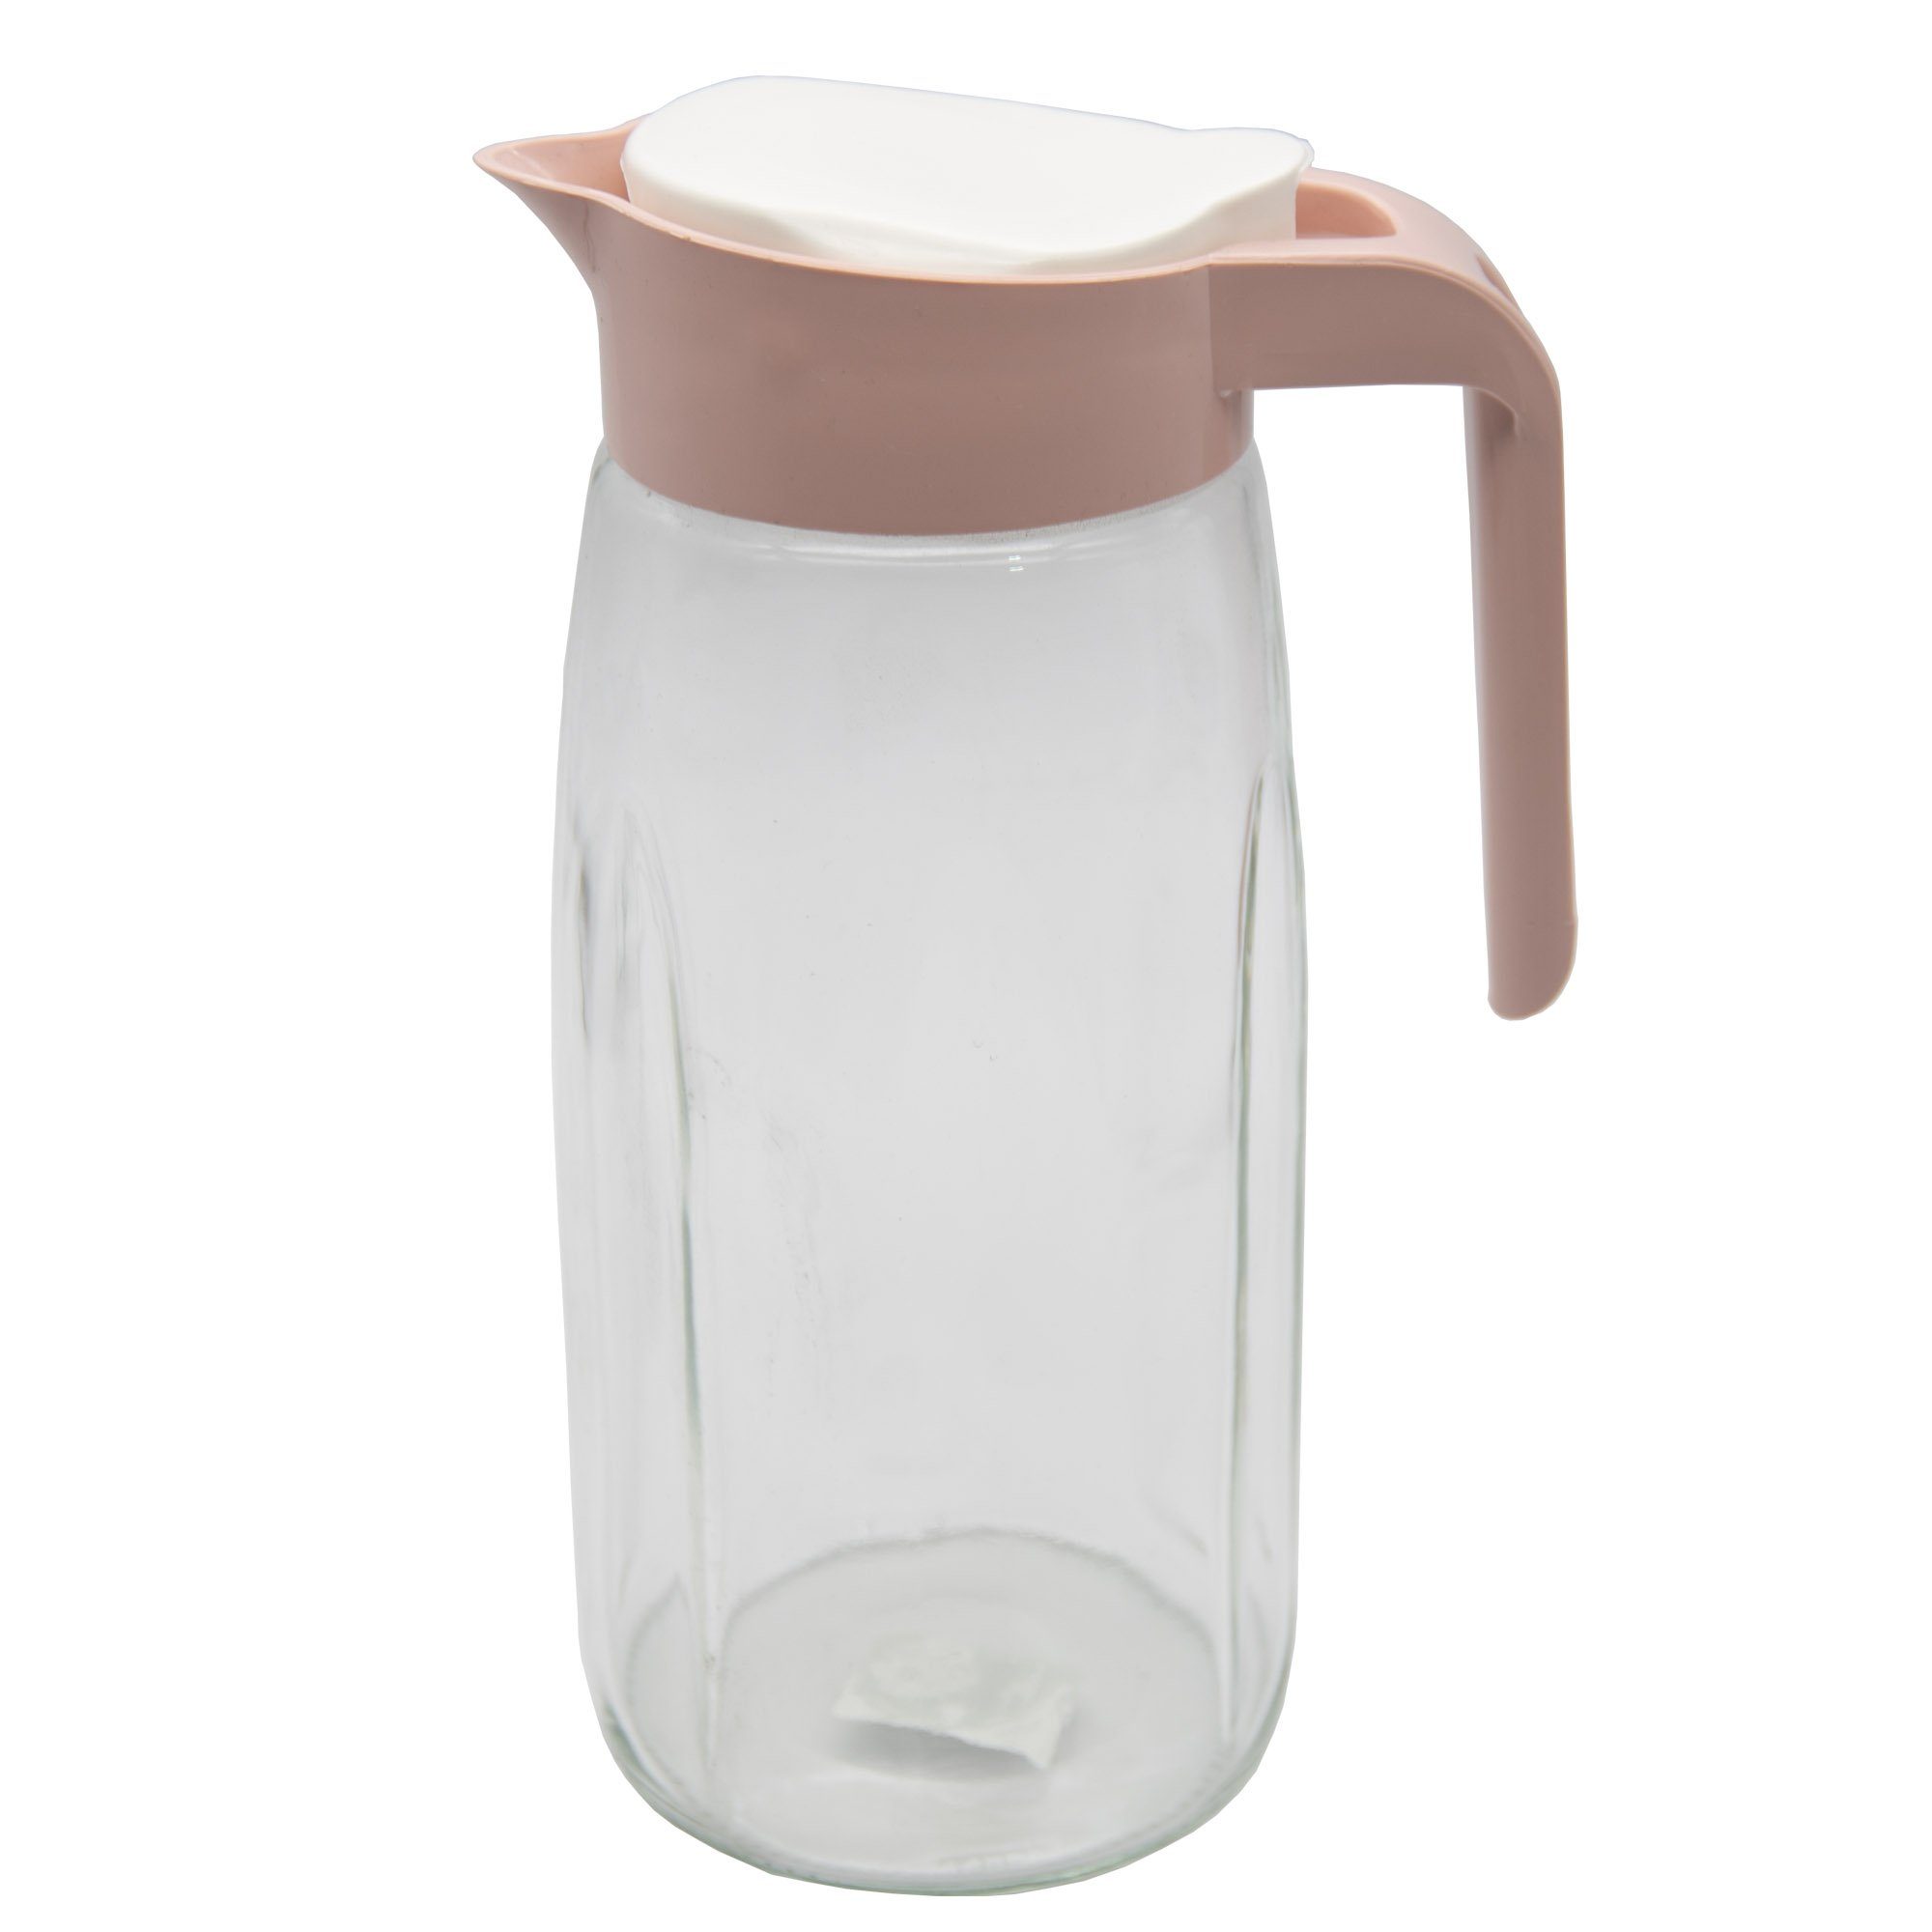 conkor Wasserkrug Glaskaraffe Glas Karaffe Krug 1,45L Wasserkaraffe, Deckel, Glaskrug, Kanne, Saftkrug Rosa